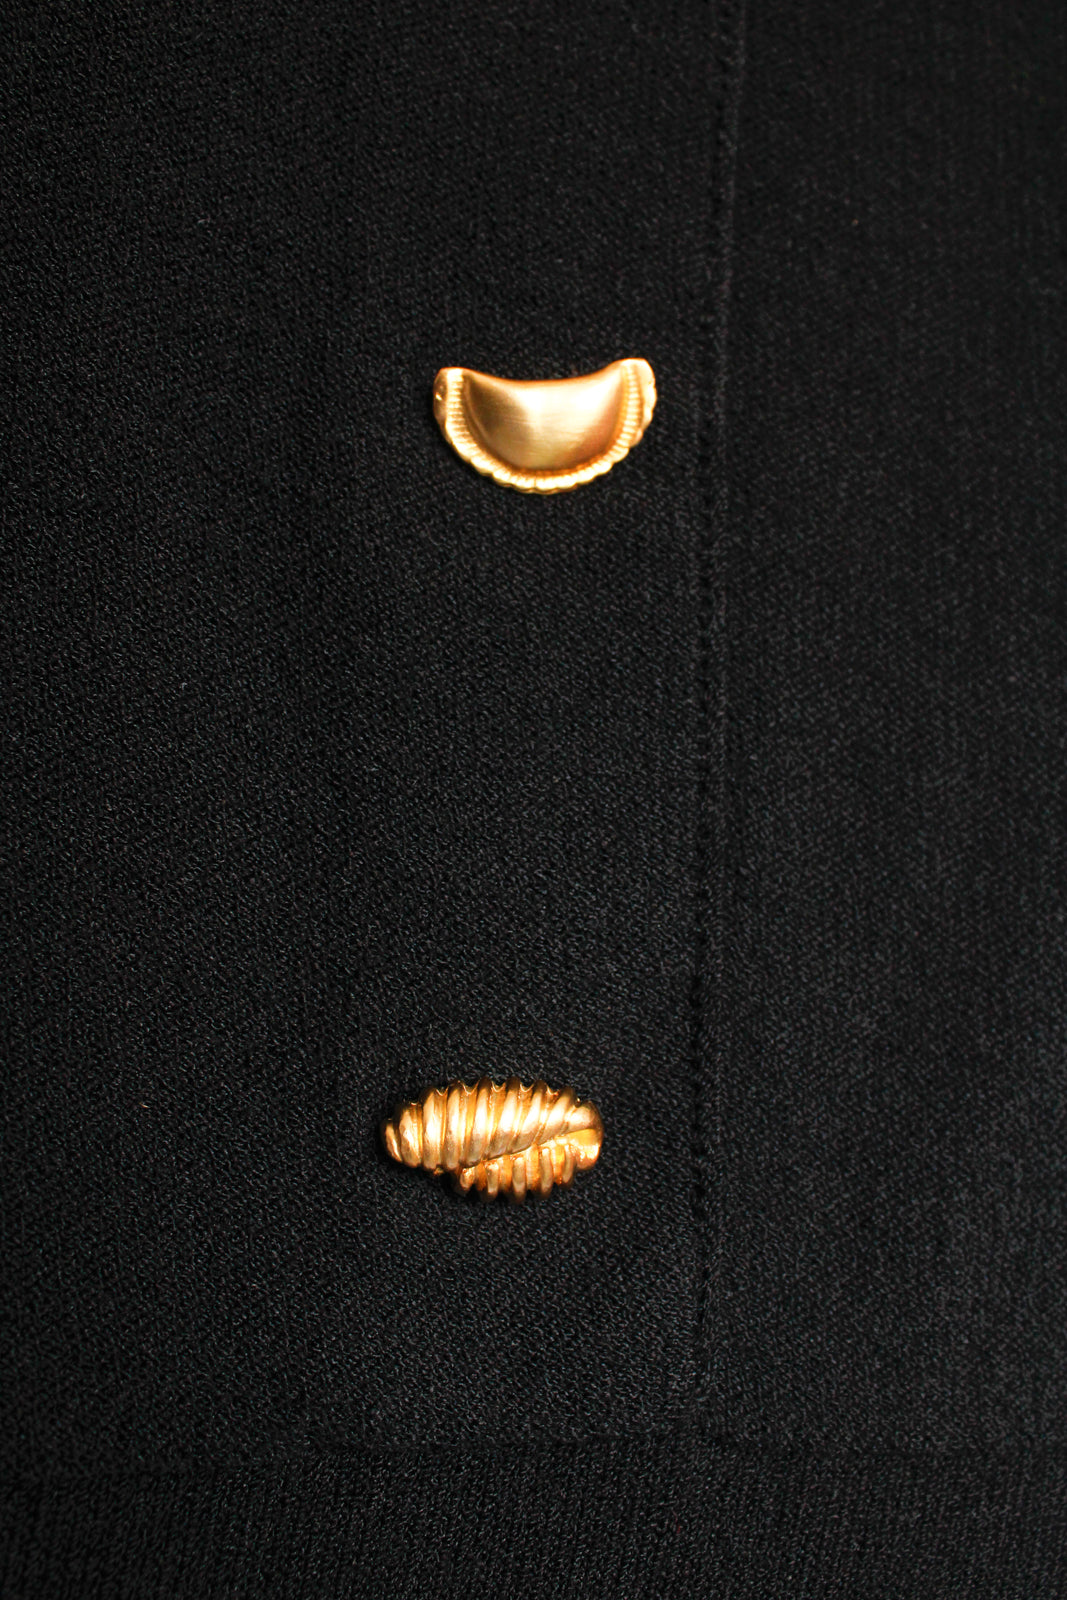 1990s Steve Fabrikant for Neiman Marcus Black Knit Pasta Button Dress - Medium